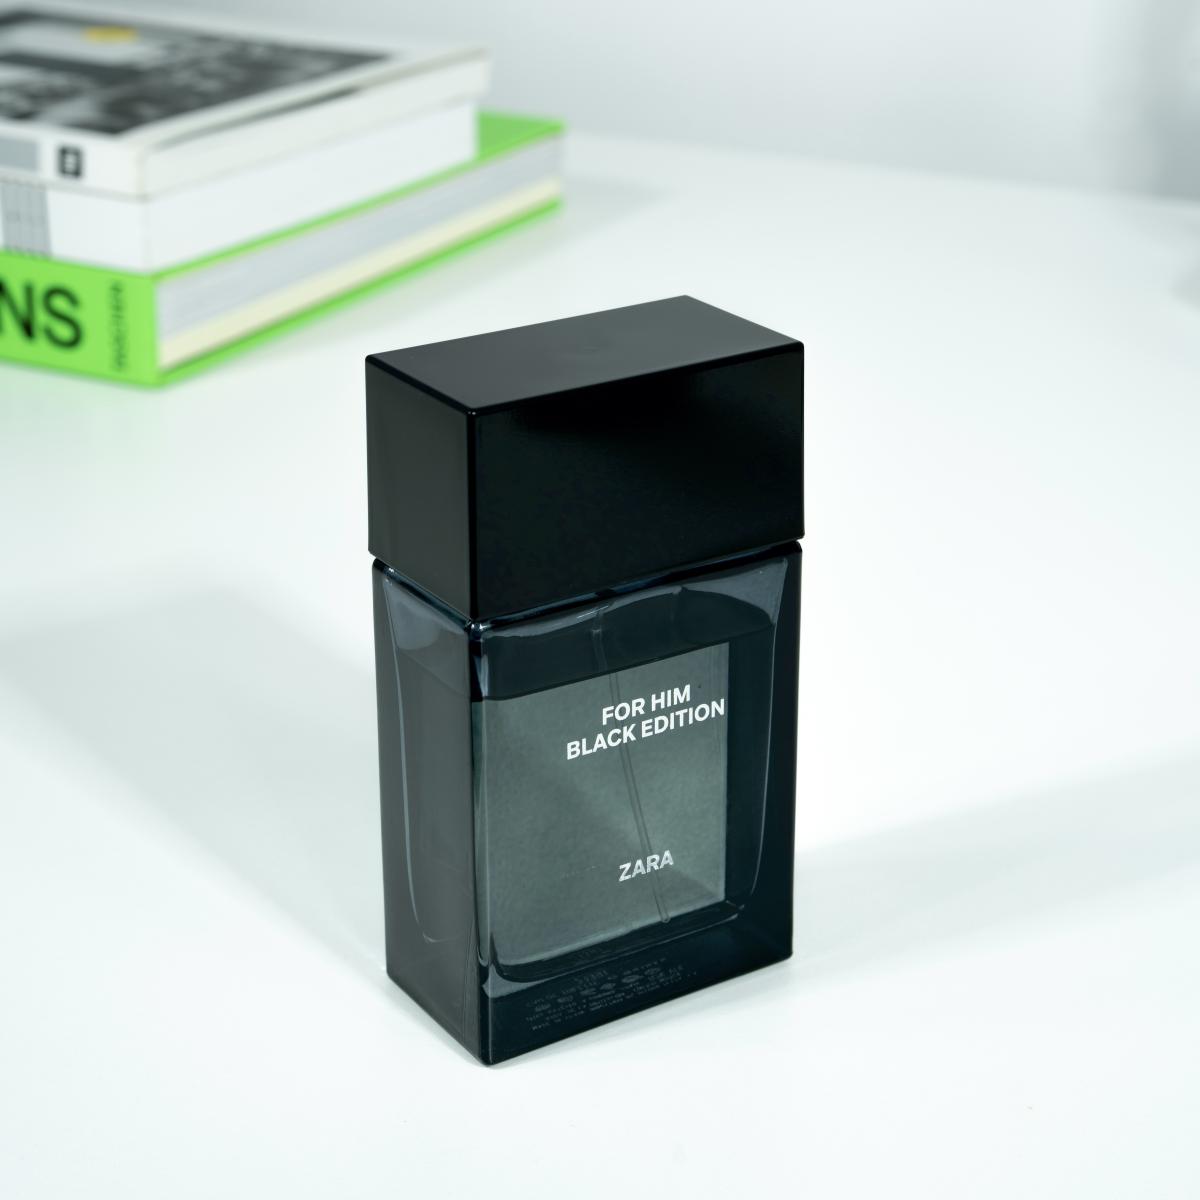 For Him Black Edition 2022 Zara cologne - a new fragrance for men 2022